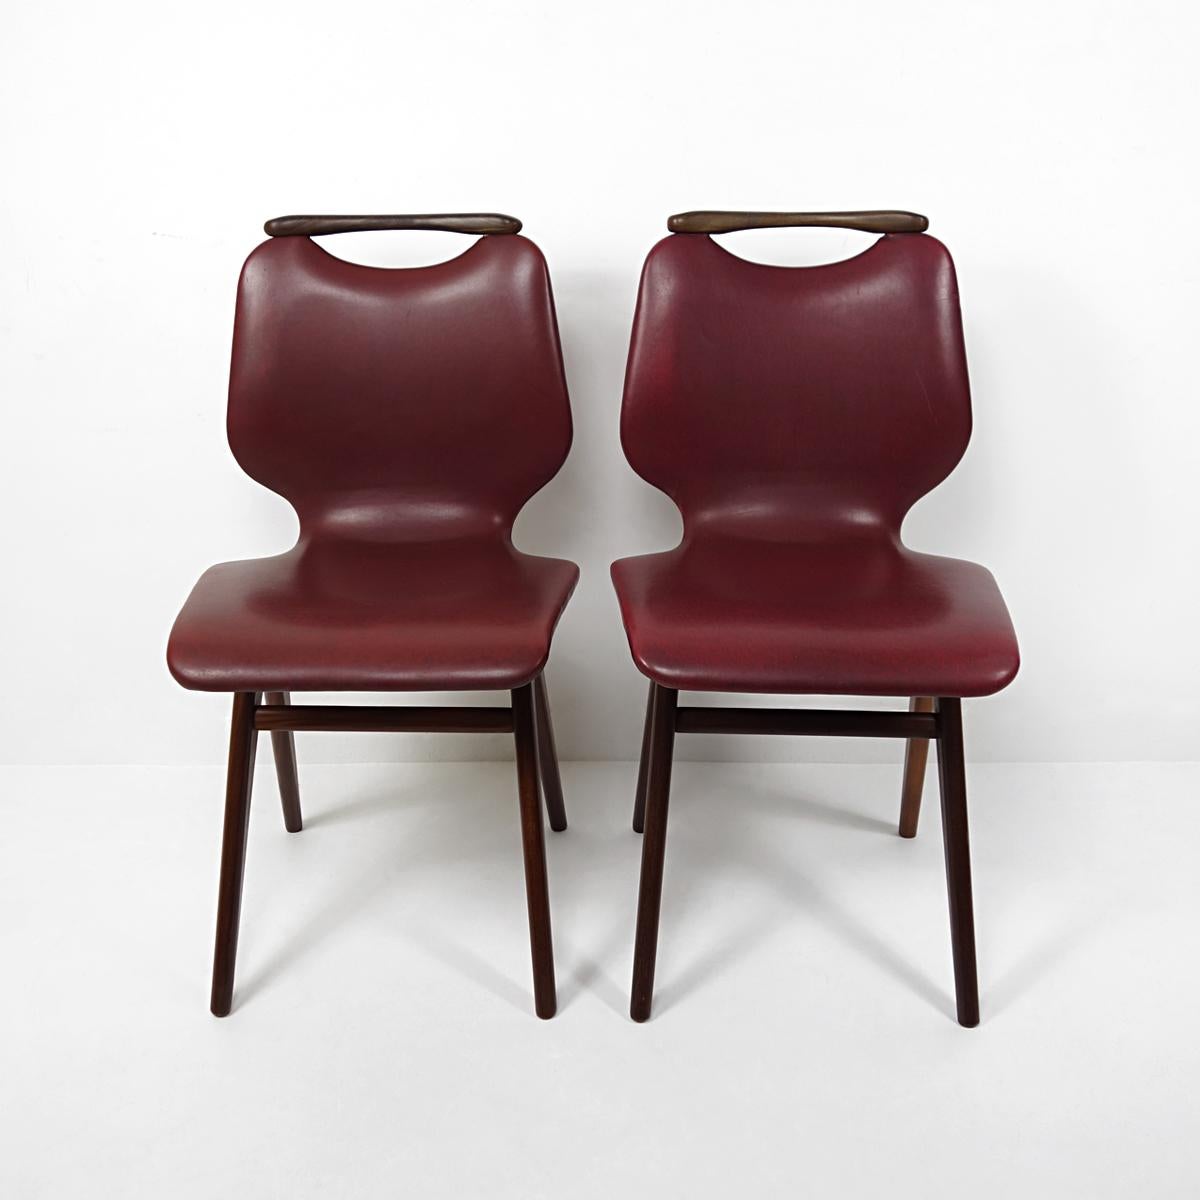 Mid-20th Century Mid-Century Modern Set of 4 Dutch Design Dining Chairs by Louis van Teeffelen